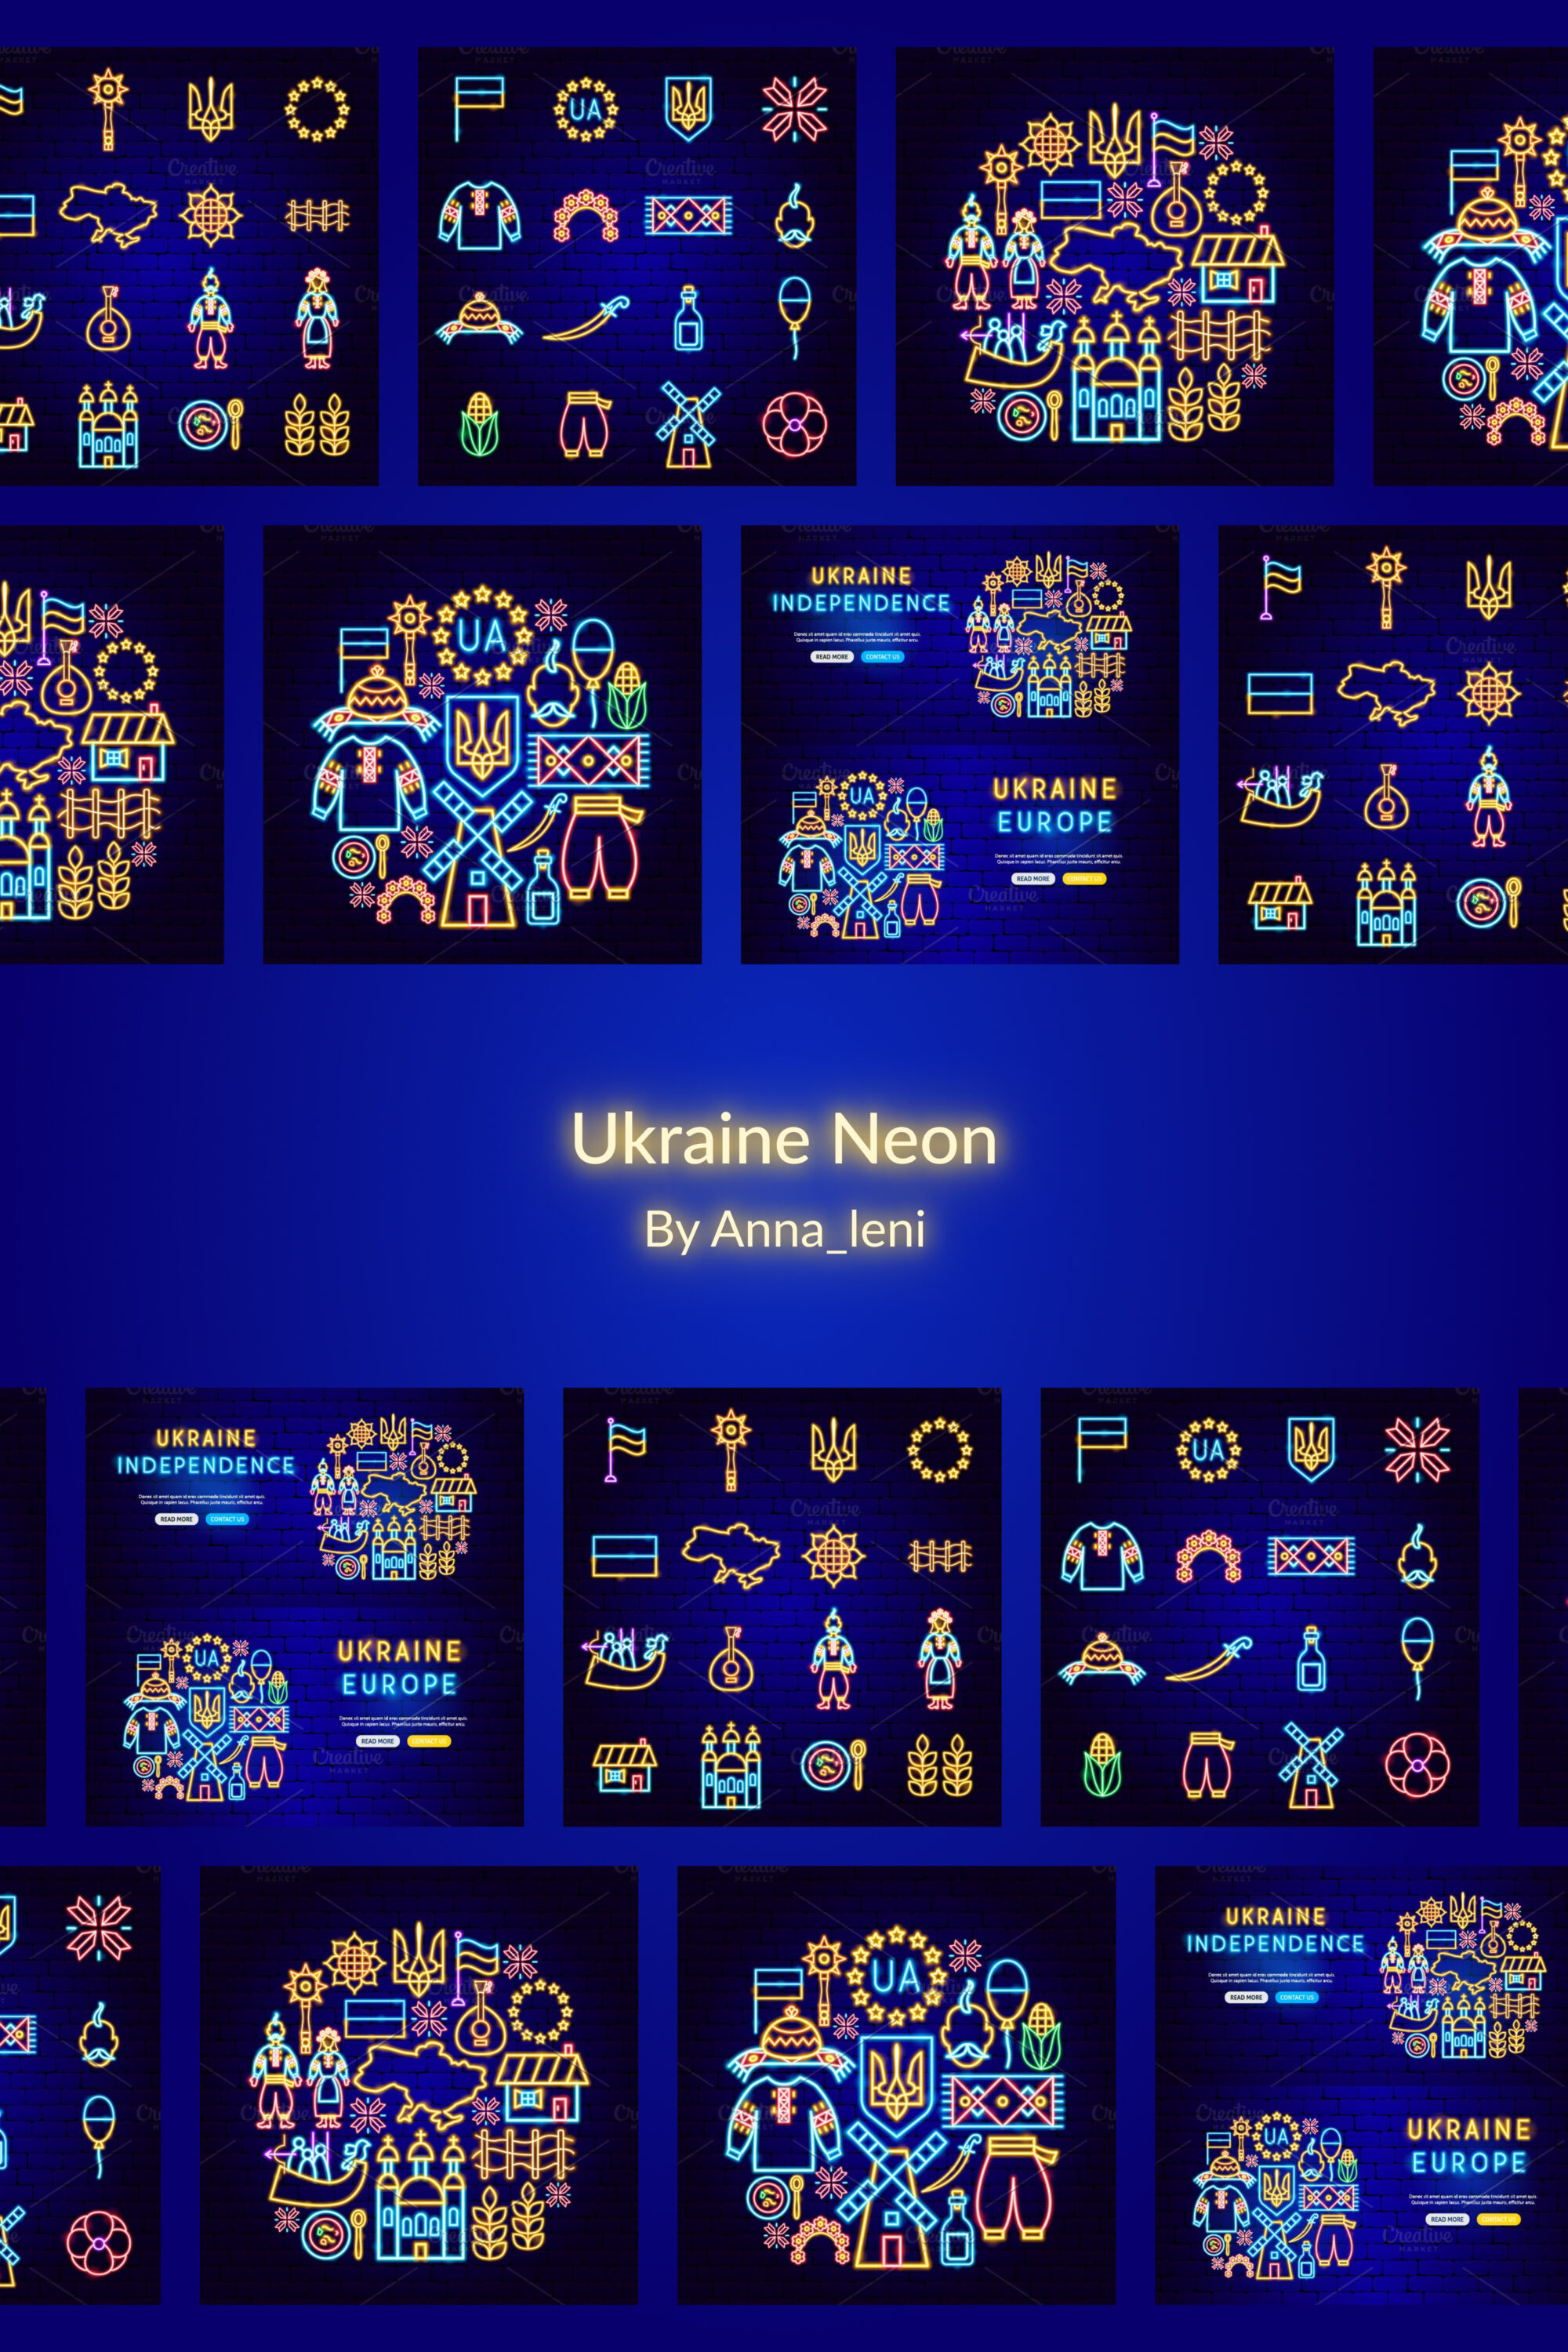 Ukraine neon of pinterest.